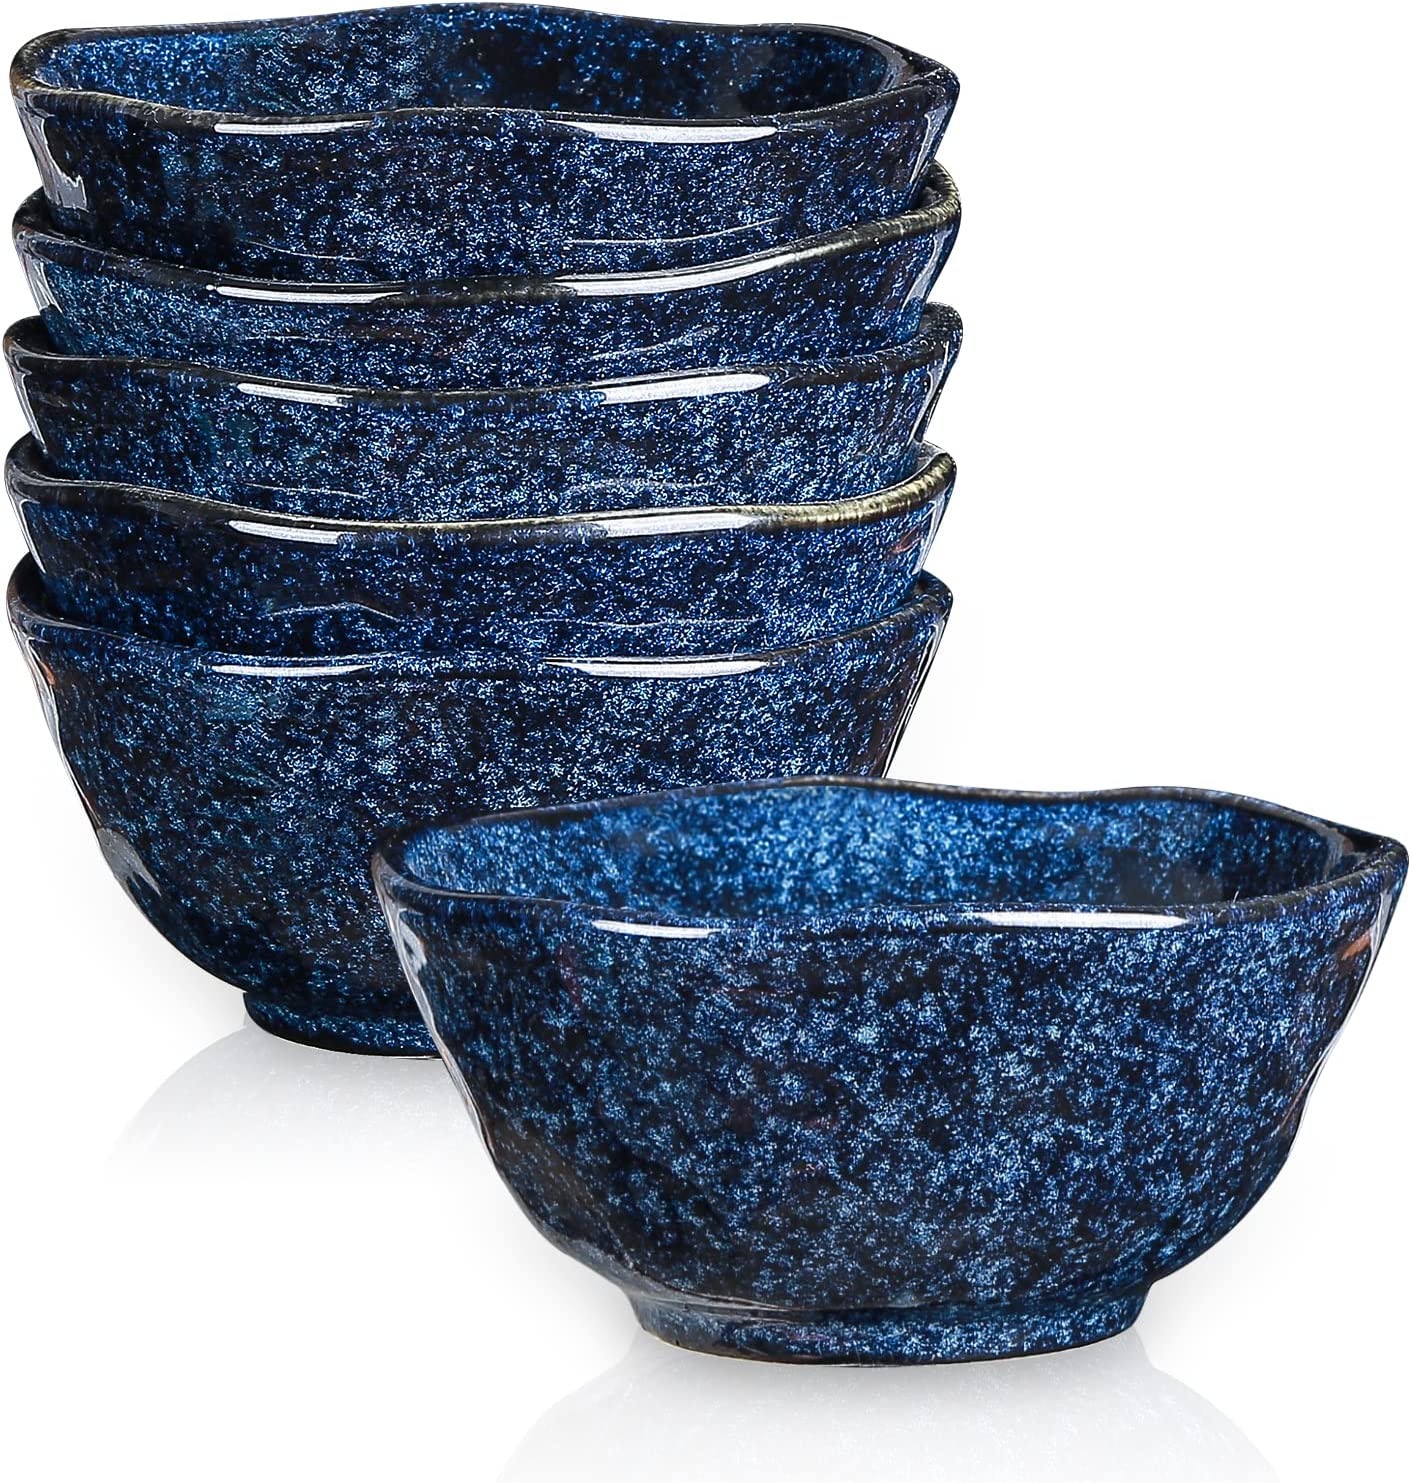 VICRAYS Creme Brulee Ramekins Ceramic Bowls - Mini Custard Cups 6